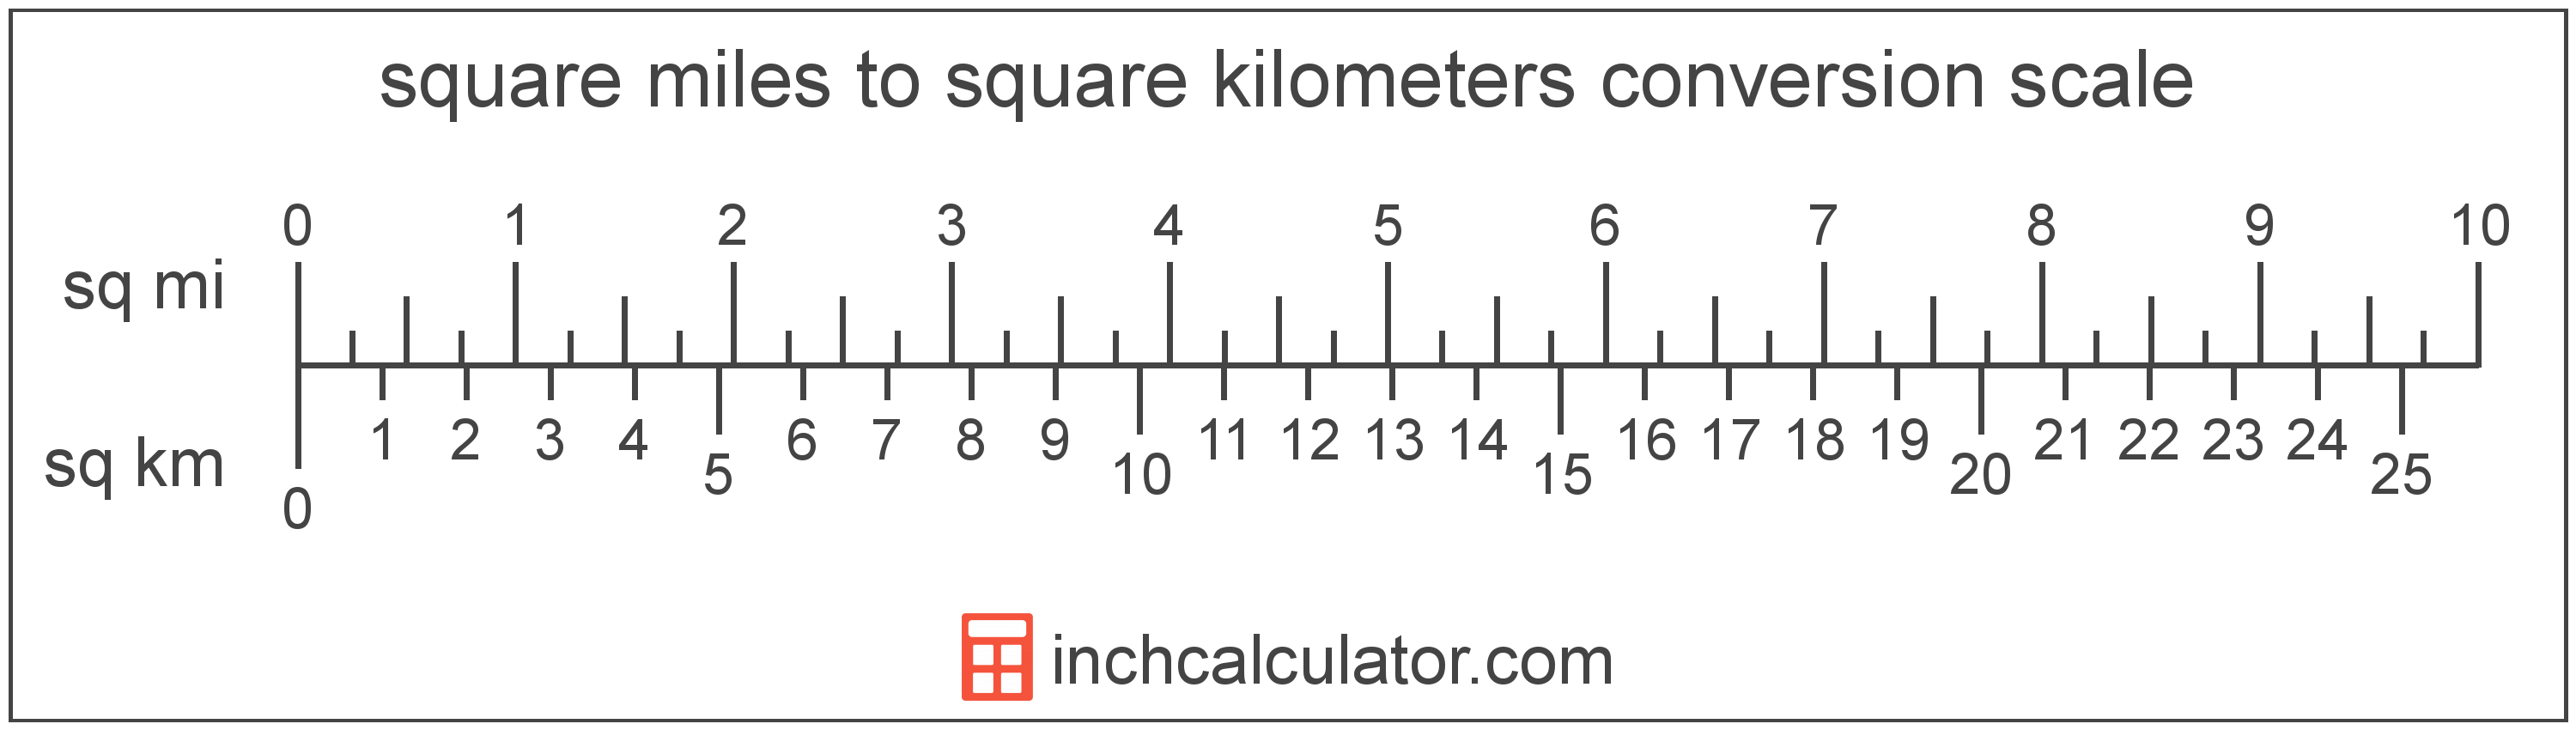 conversion scale showing square miles and equivalent square kilometers area values